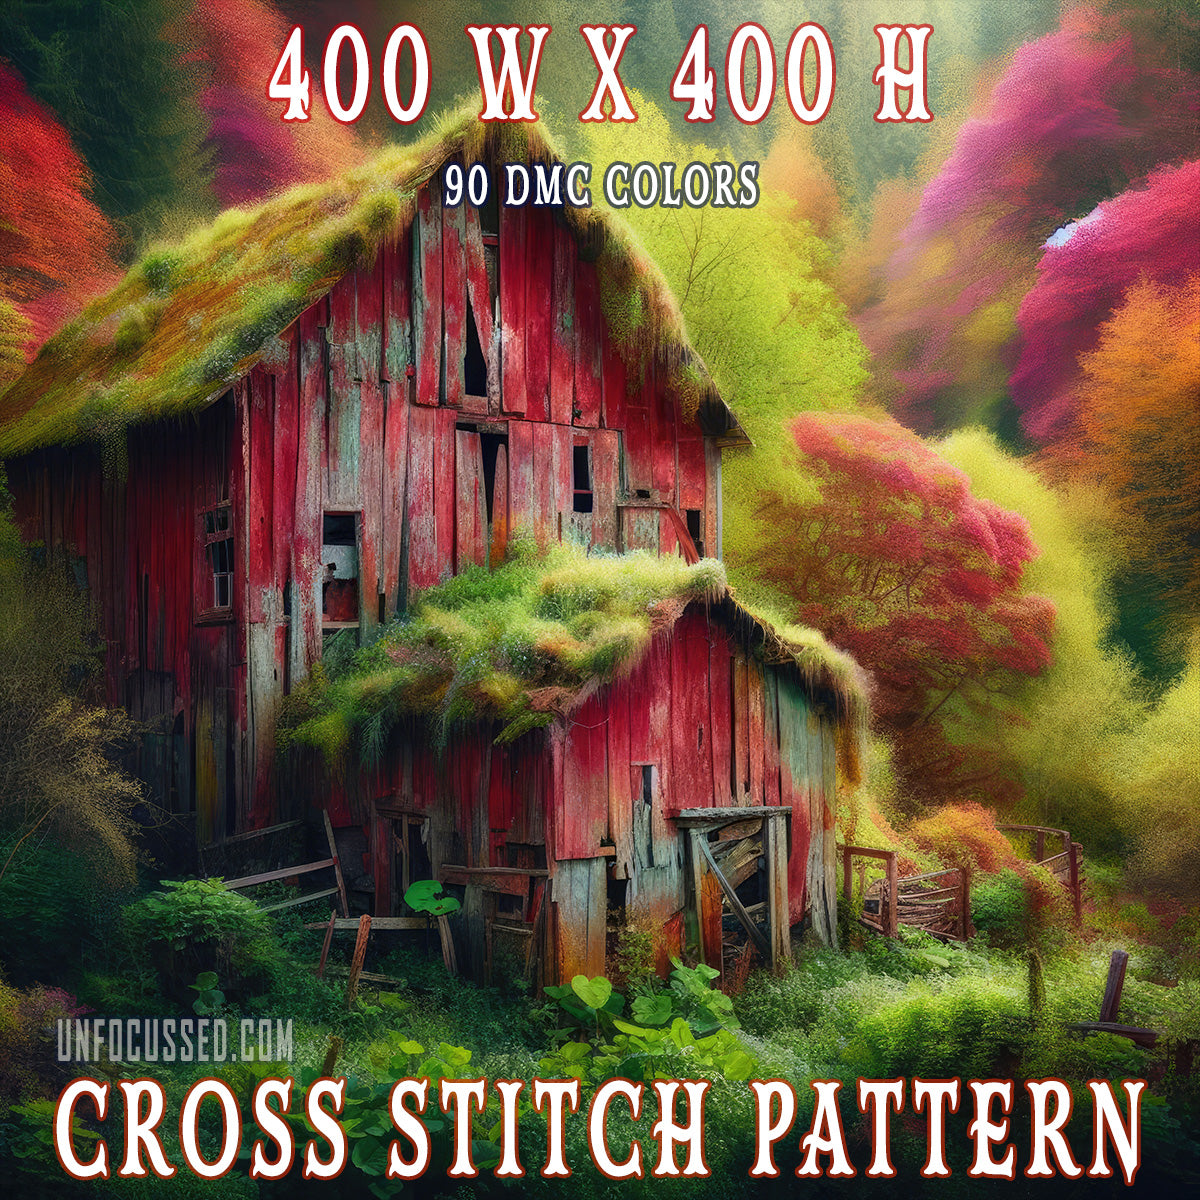 A Barn's Tale Cross Stitch Pattern